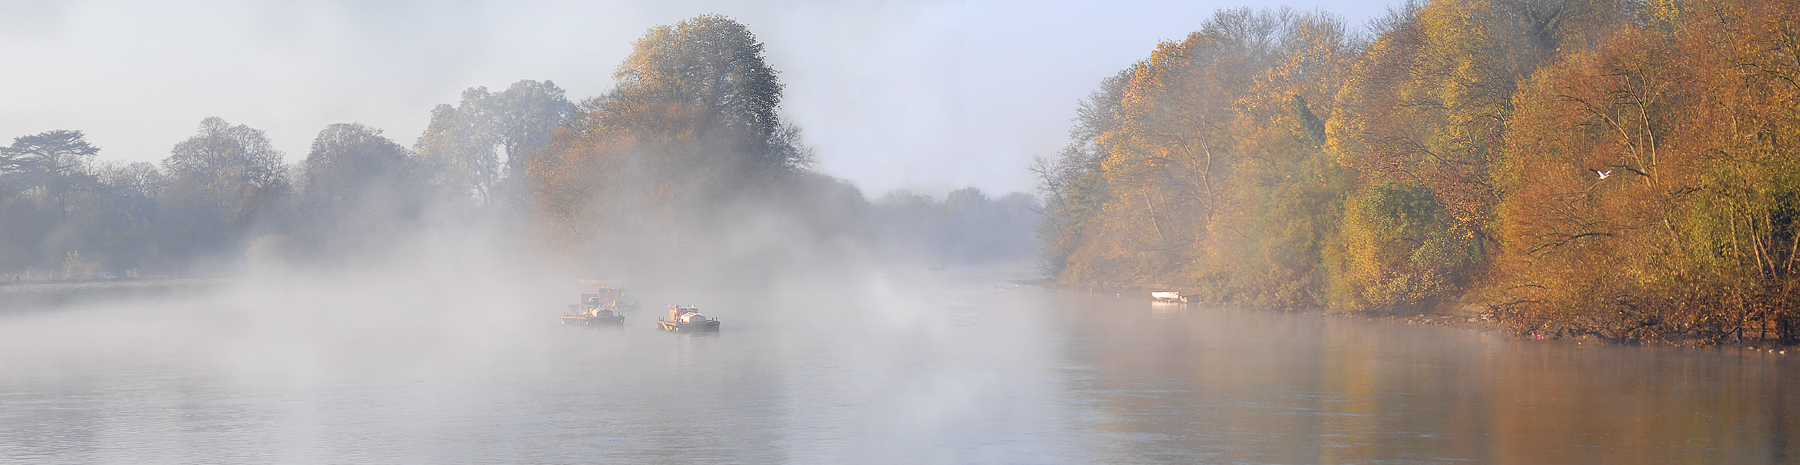 Thames, London, river, fog, dawn, ships, water, nature, landscape,, PIOTR CZARNIECKI